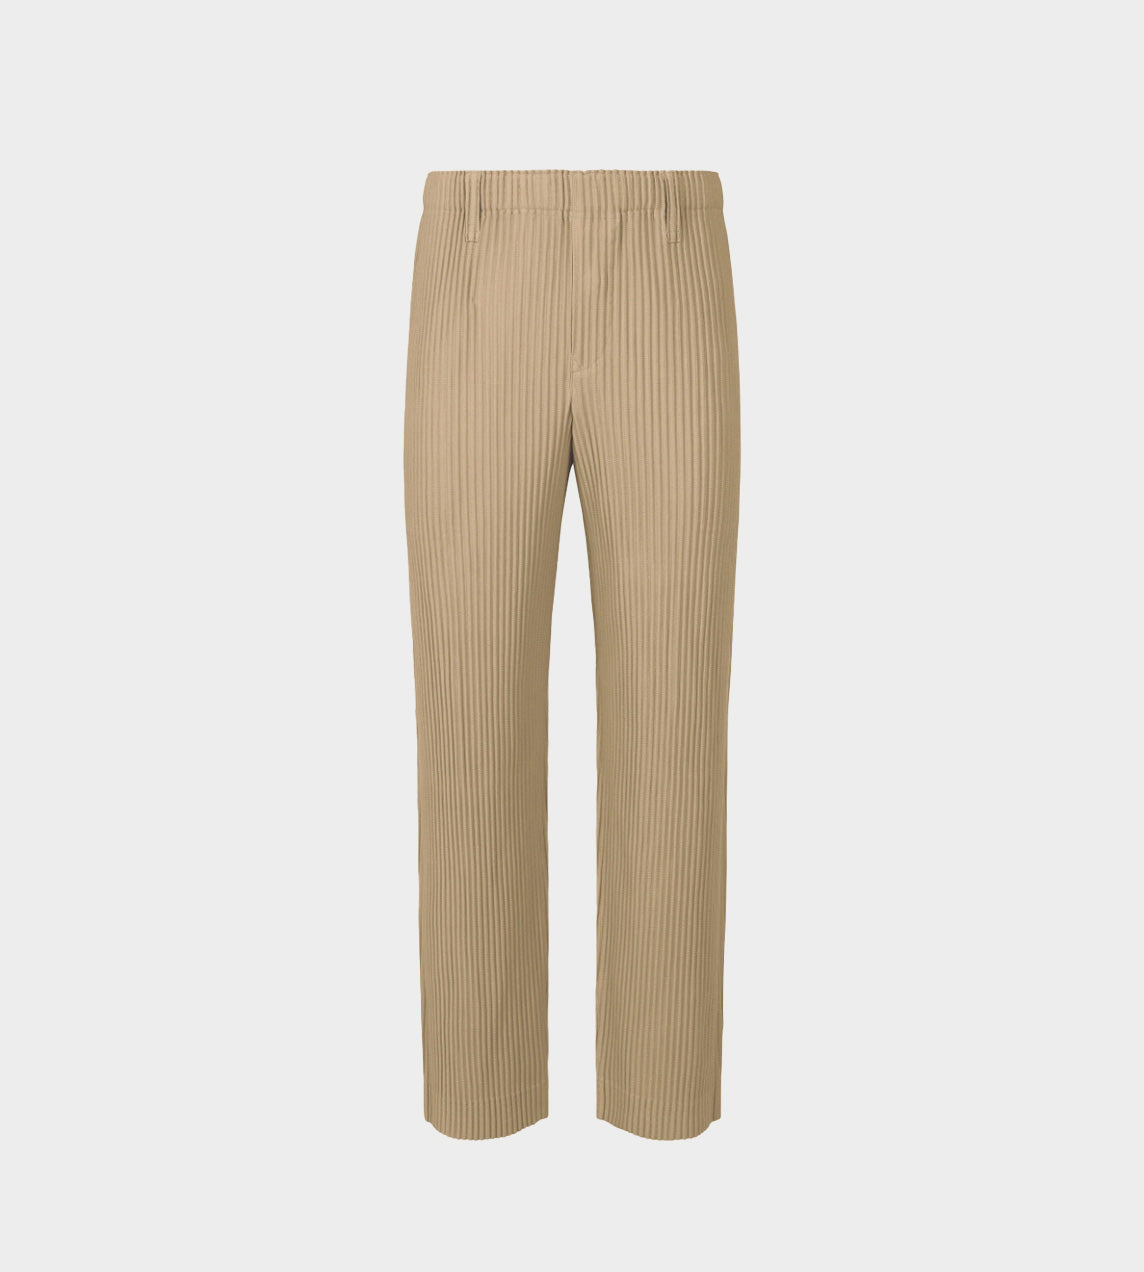 Homme Plisse Issey Miyake - Colour Pleats Pleated Pants Sand Beige